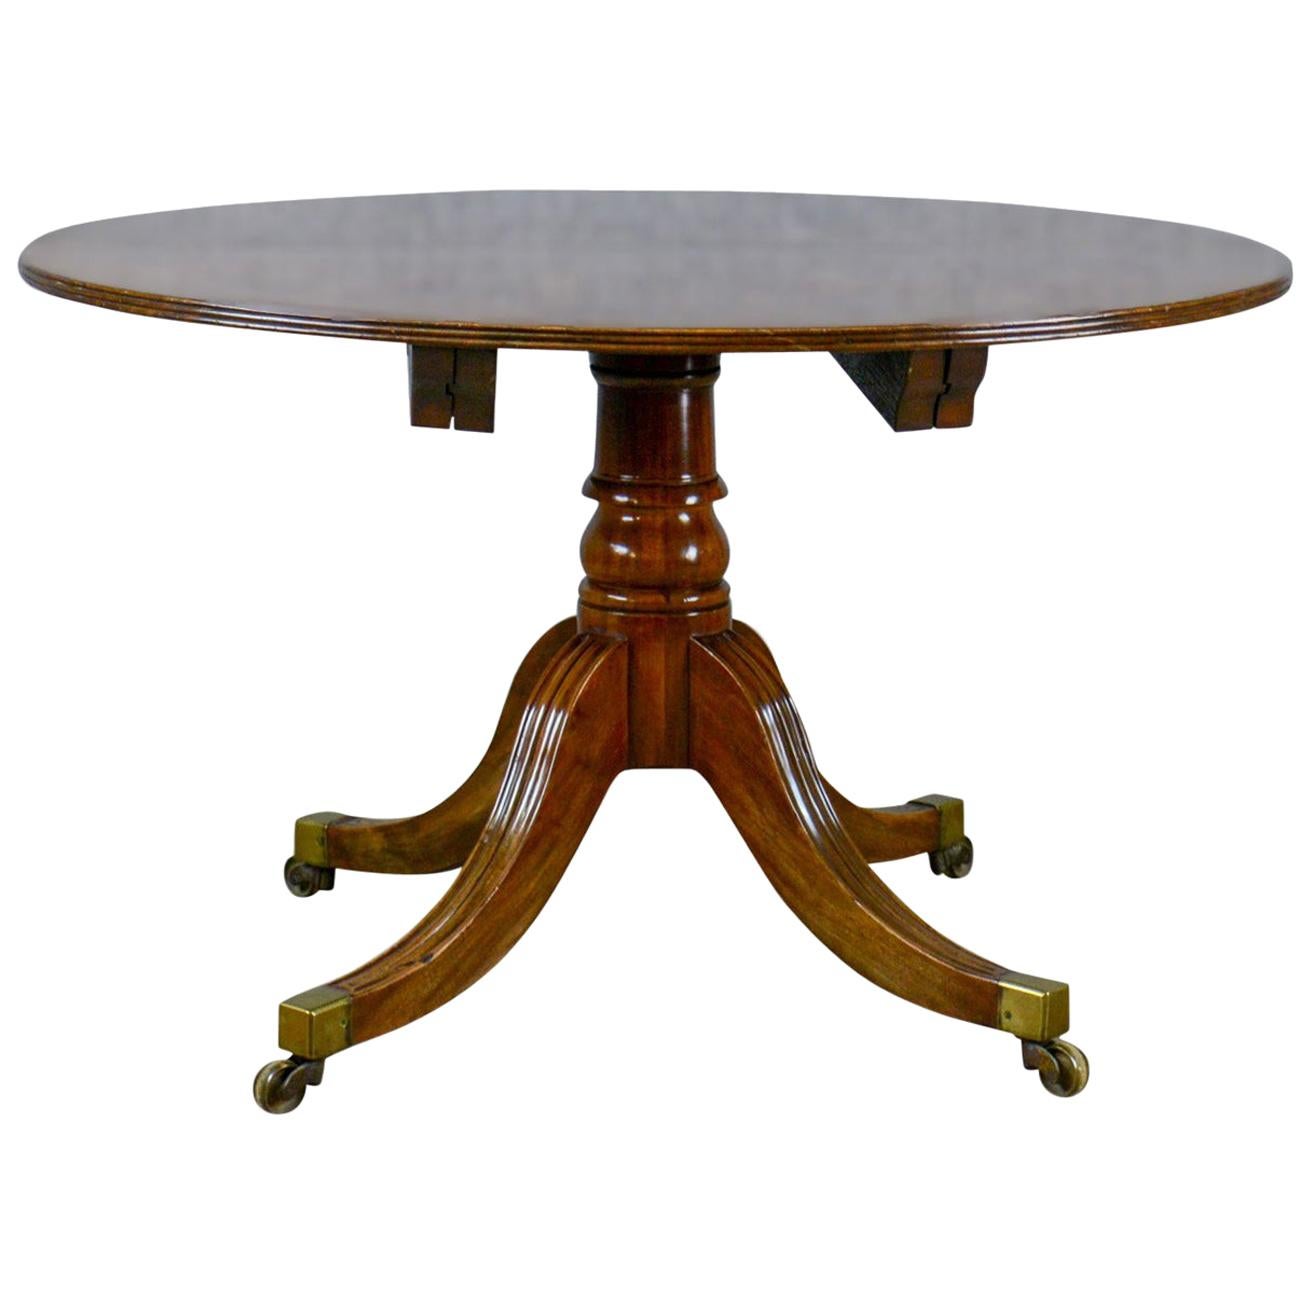 Antique Dining Table, English, Mahogany, Seats 4-6, Extending, Regency